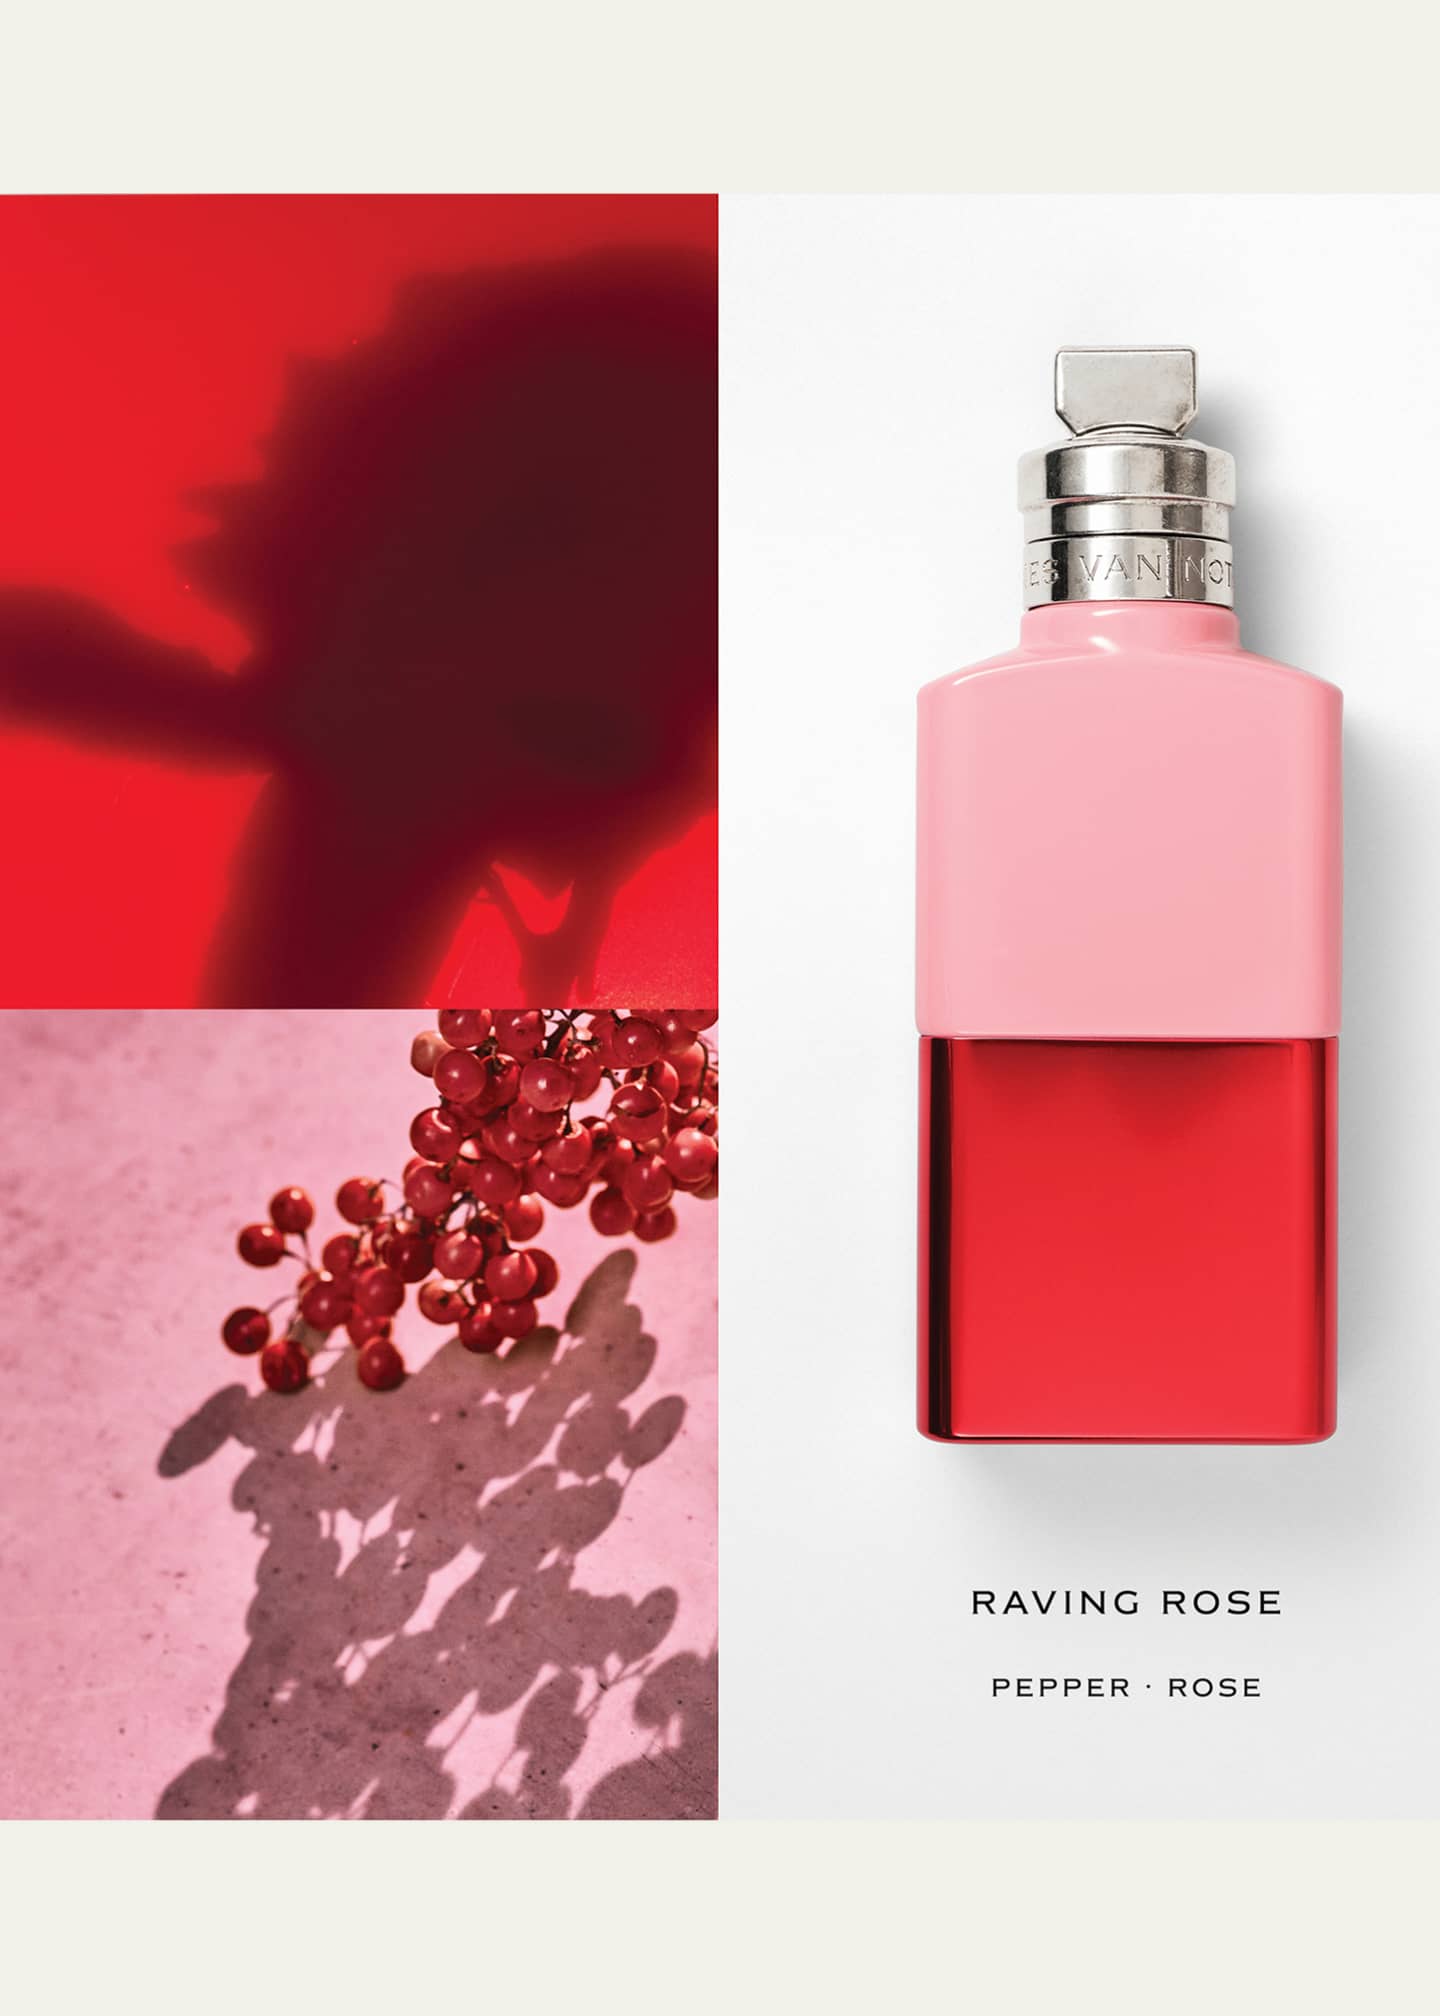 Dries Van Noten Raving Rose Eau de Parfum, 3.4 oz. - Bergdorf Goodman